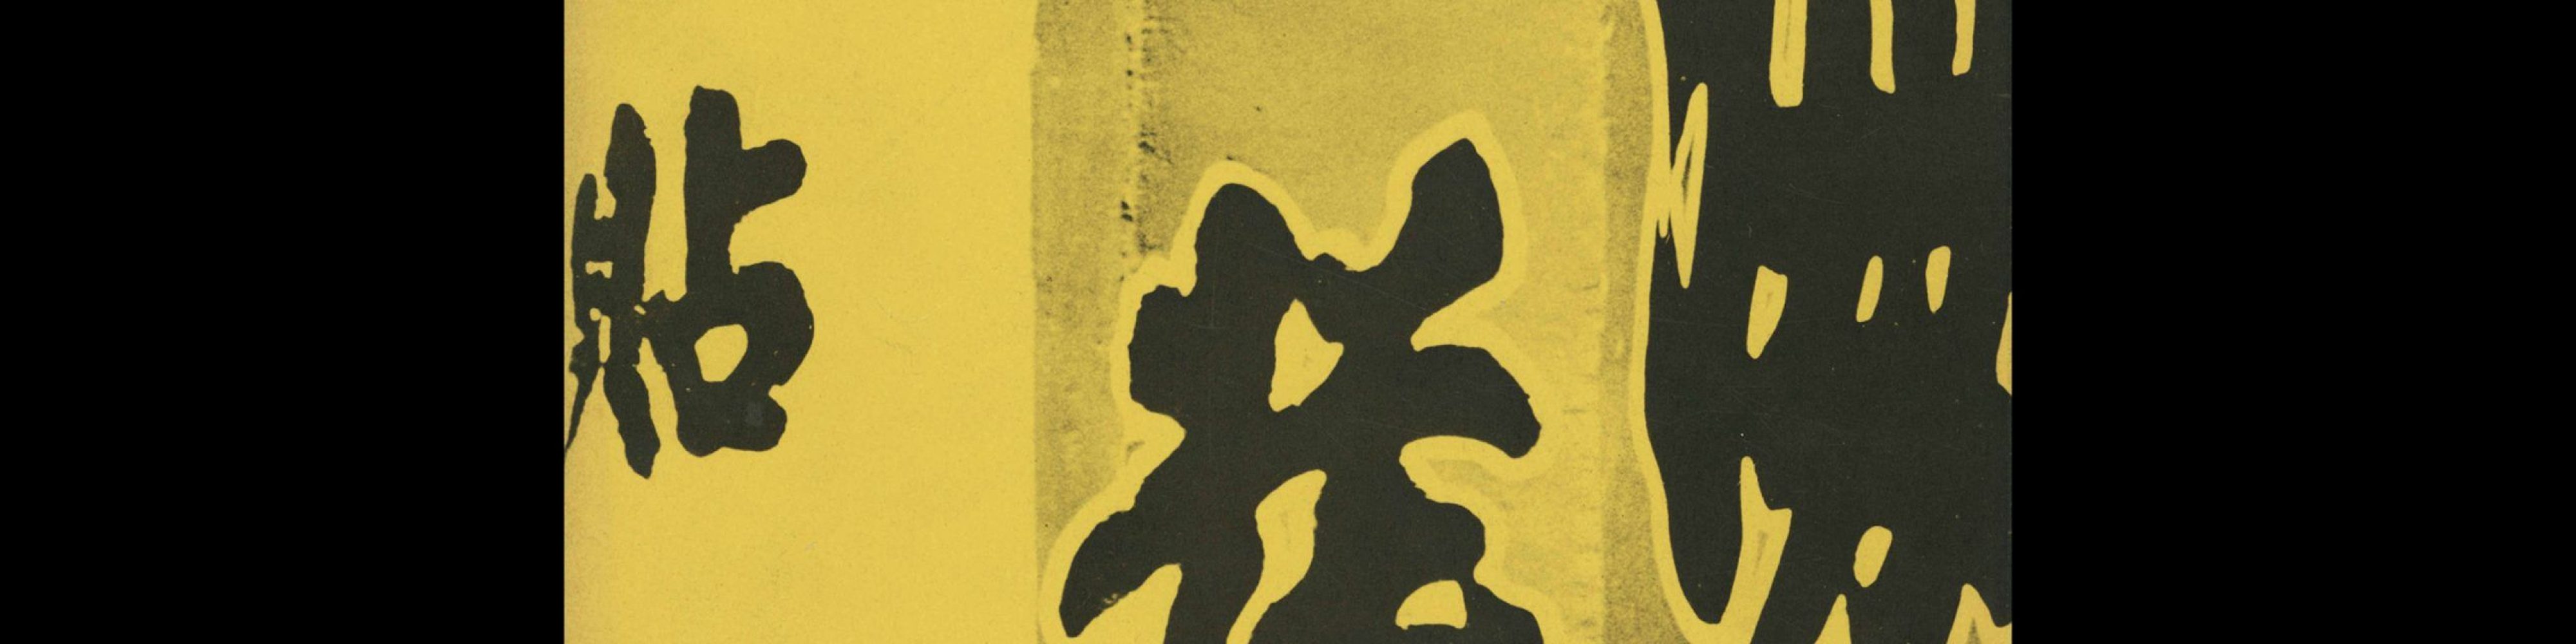 Typographica, New Series 13, 1966. Designed by Herbert Spencer